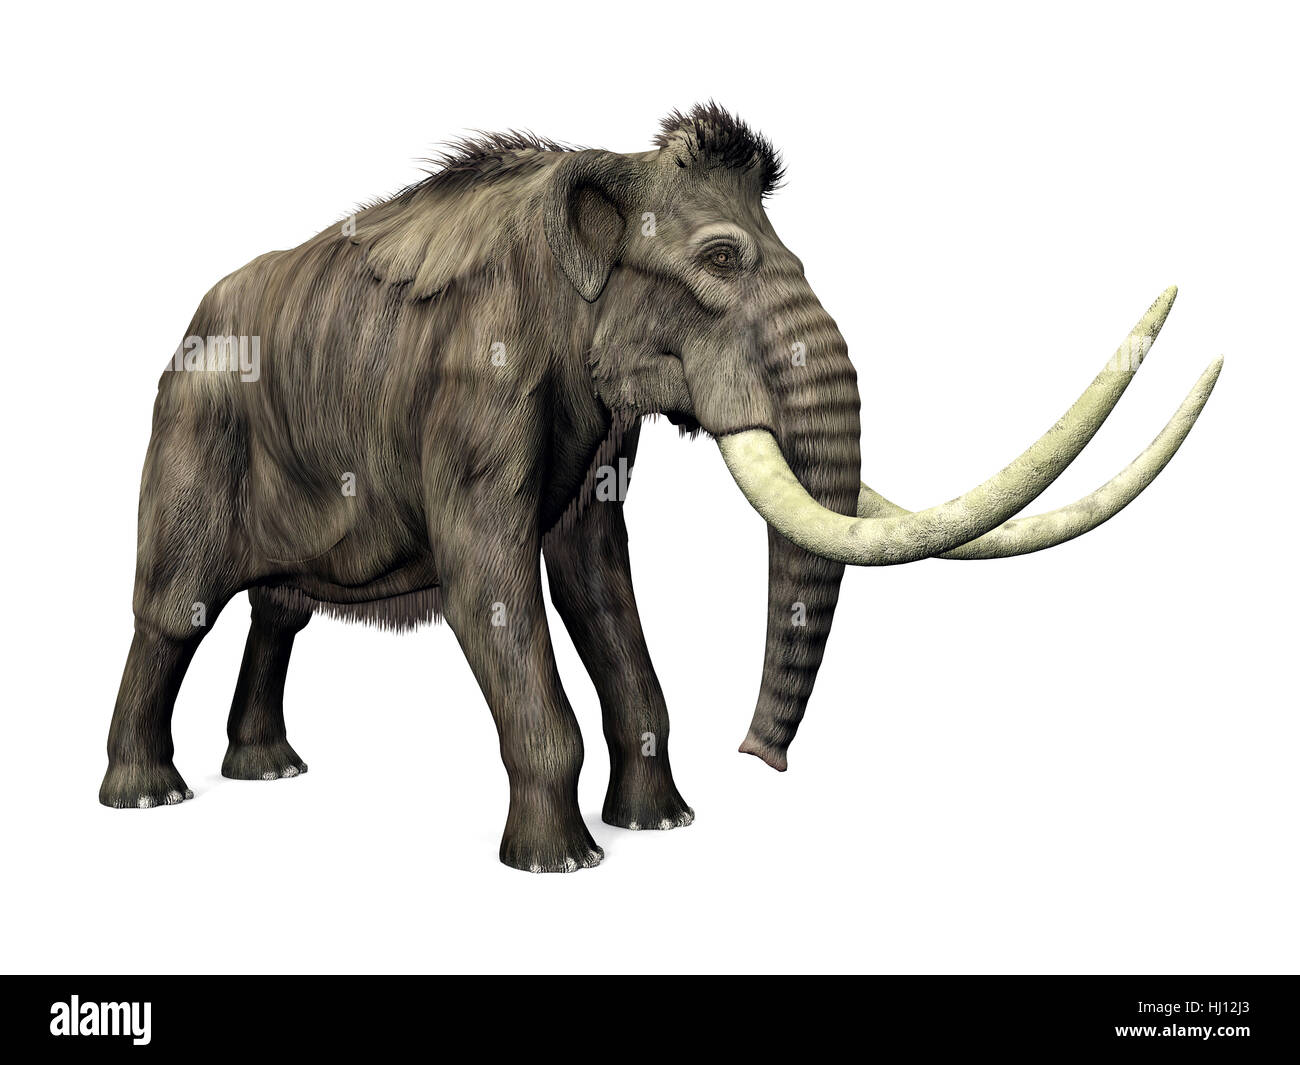 Elephant, avorio, brosmio, mammut, paleontologia, grande, grande, enorme, extreme, Foto Stock